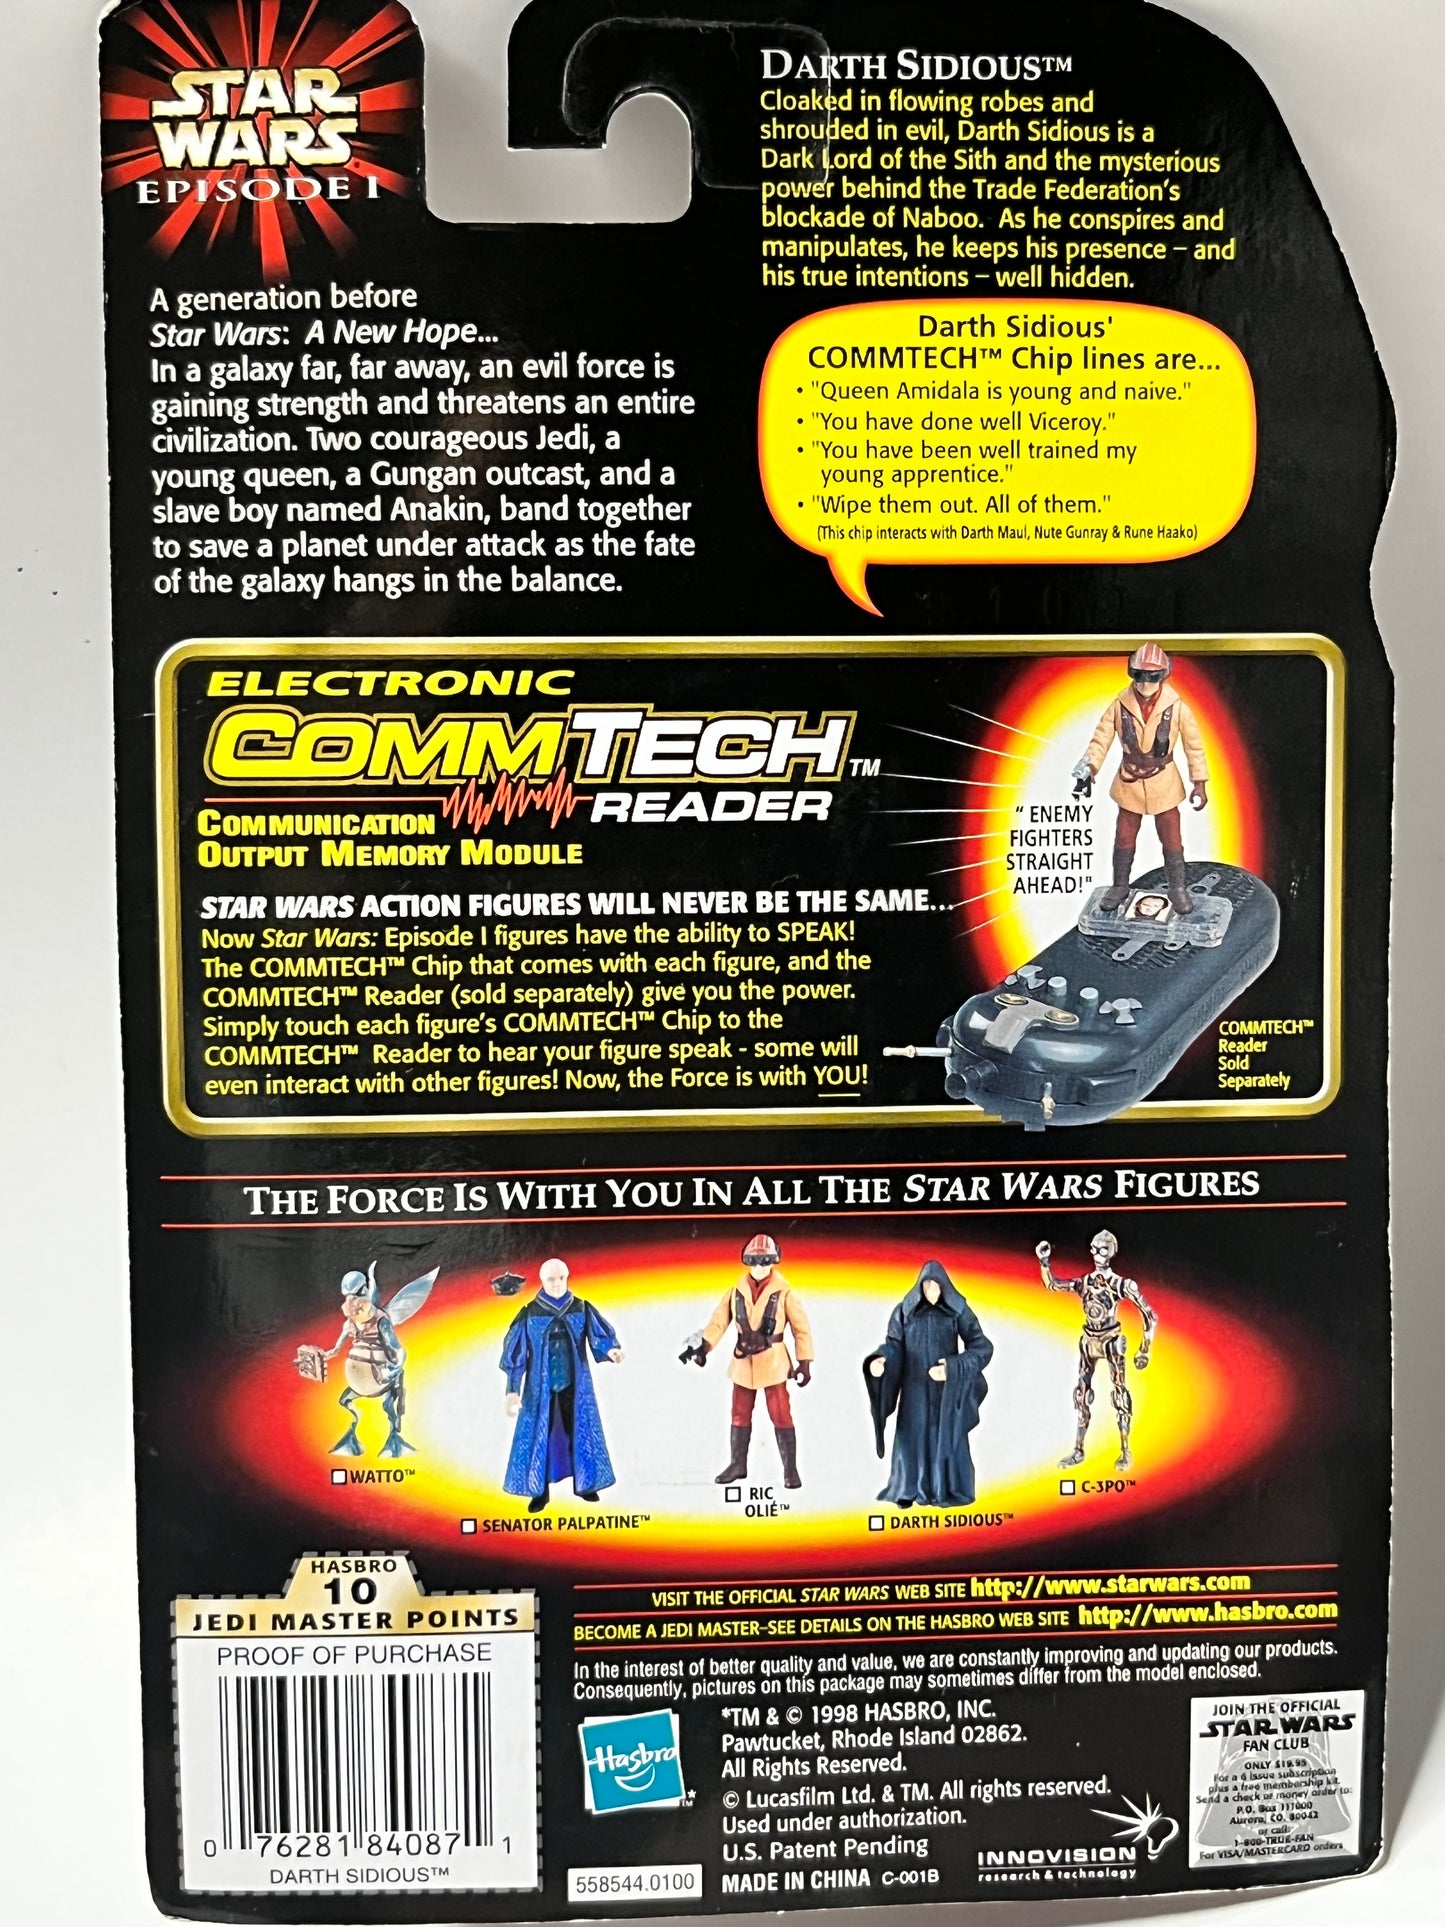 Star Wars Episode I - The Phantom Menace Darth Sidious Figure w/ CommTech Chip